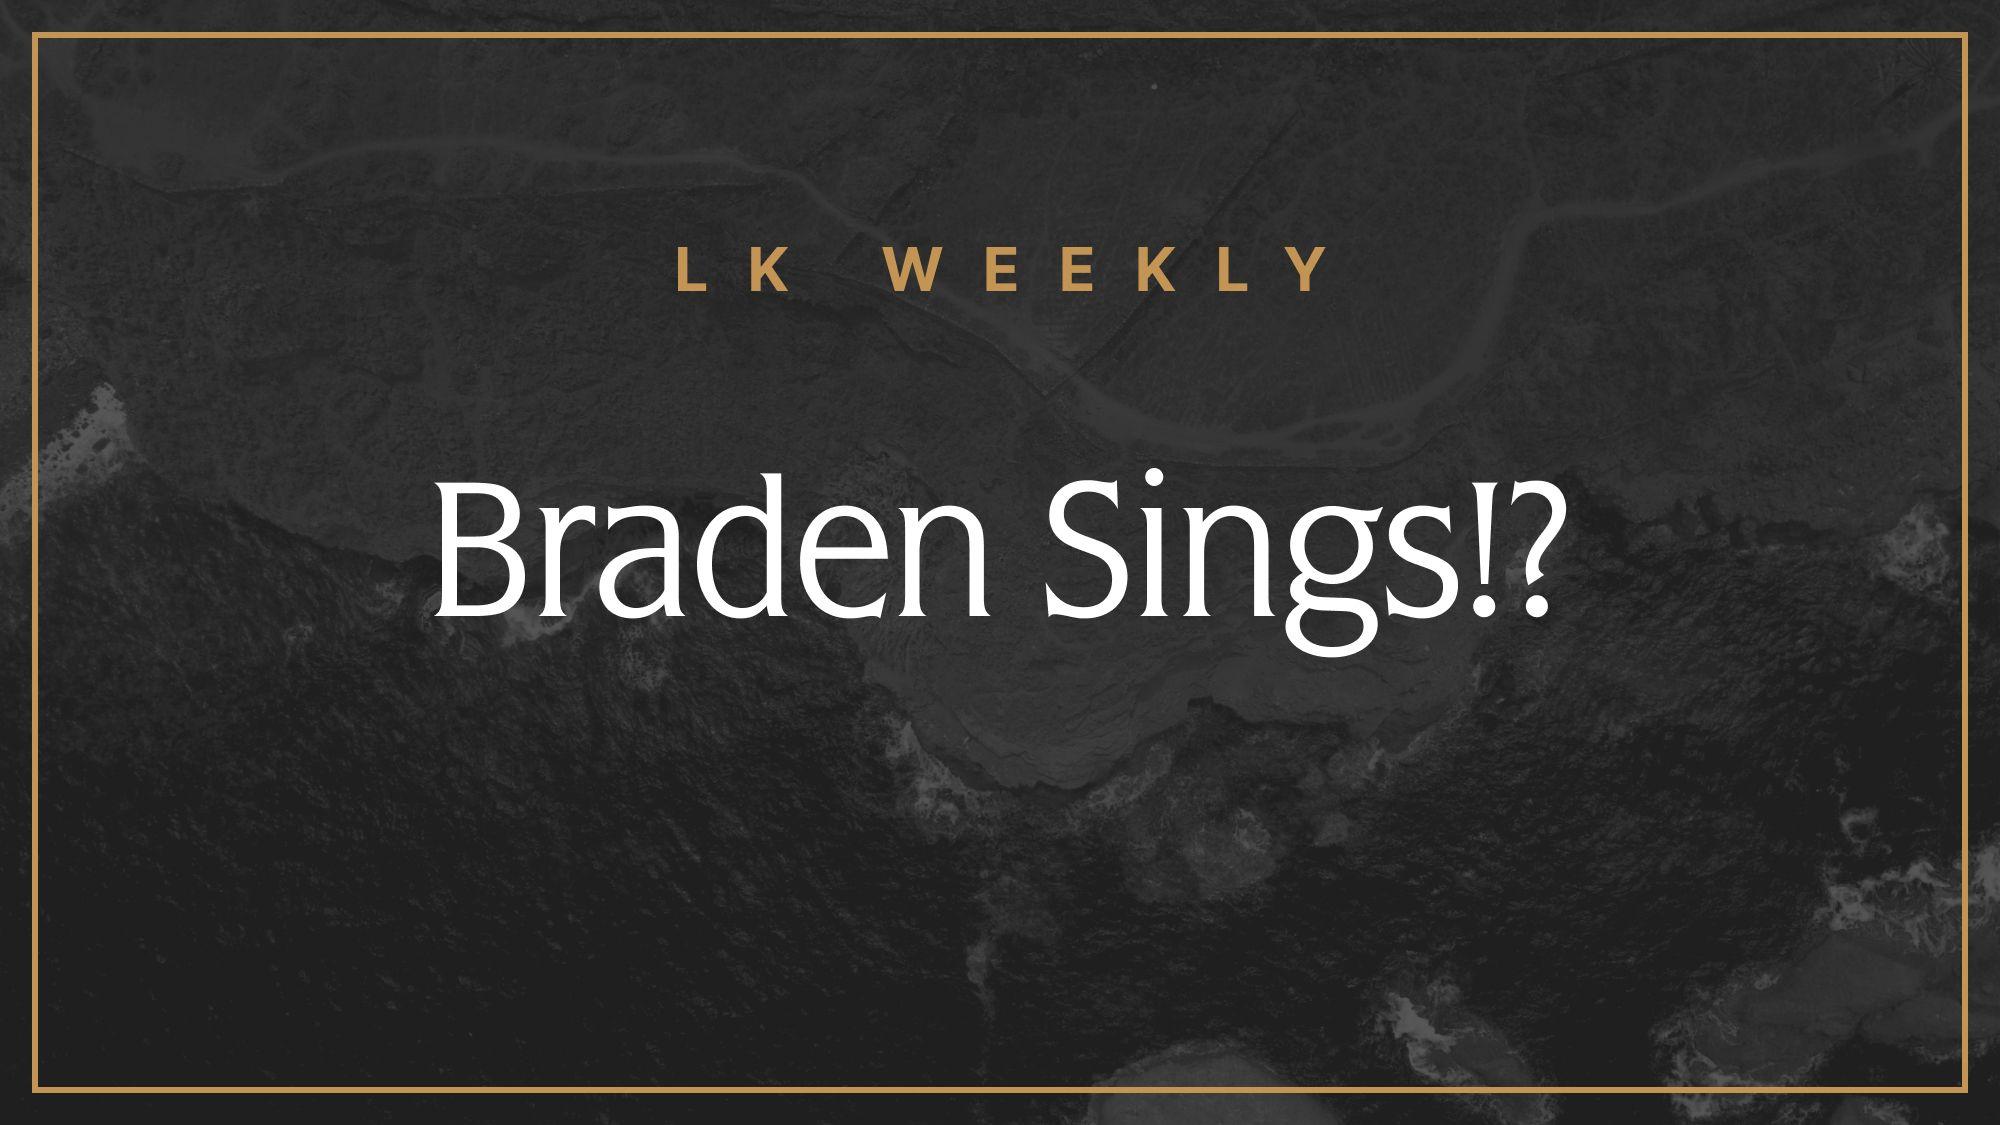 Feature image for LK Weekly: Braden sings!?